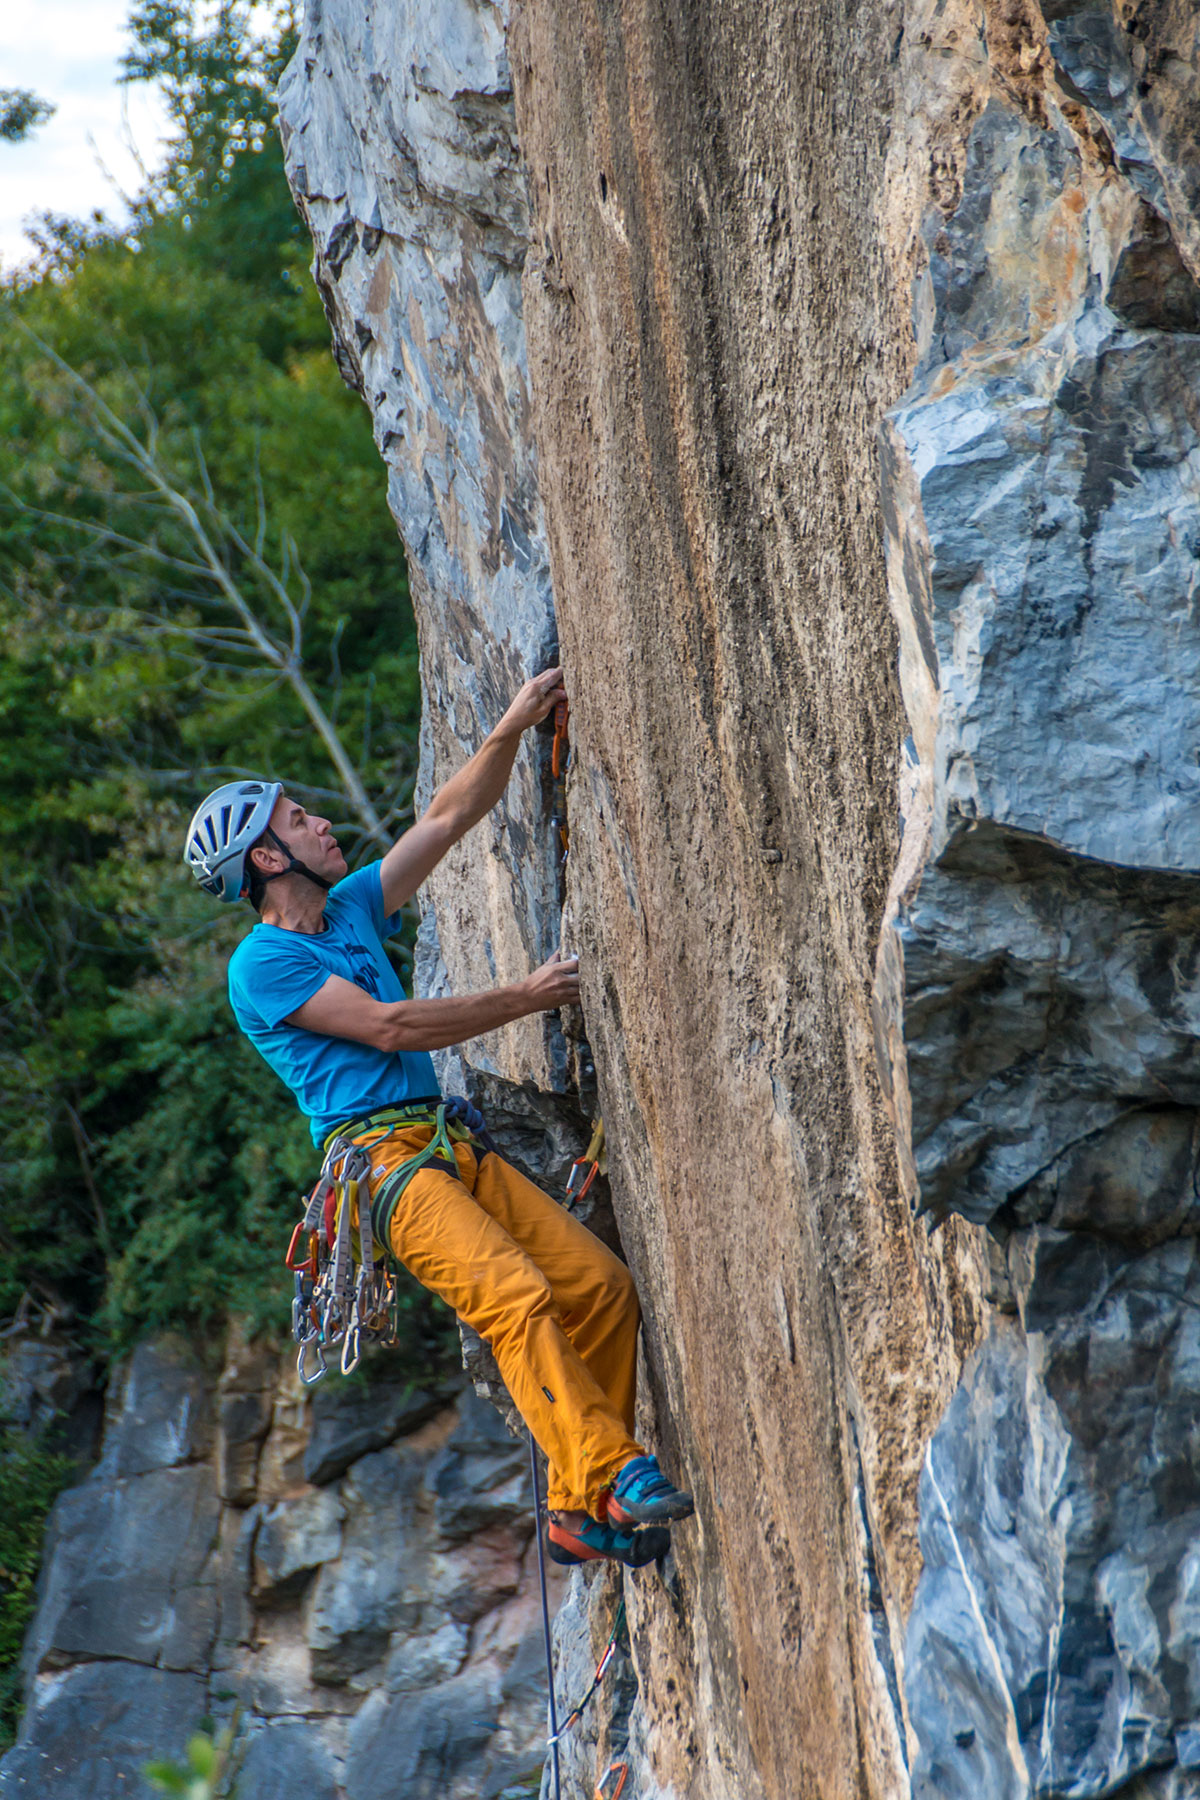 Warstein, Hillenberg, Route „Sichelriss clean“, 9-, Climber Mathias Weck, Photographer: Thihamy Nguyen